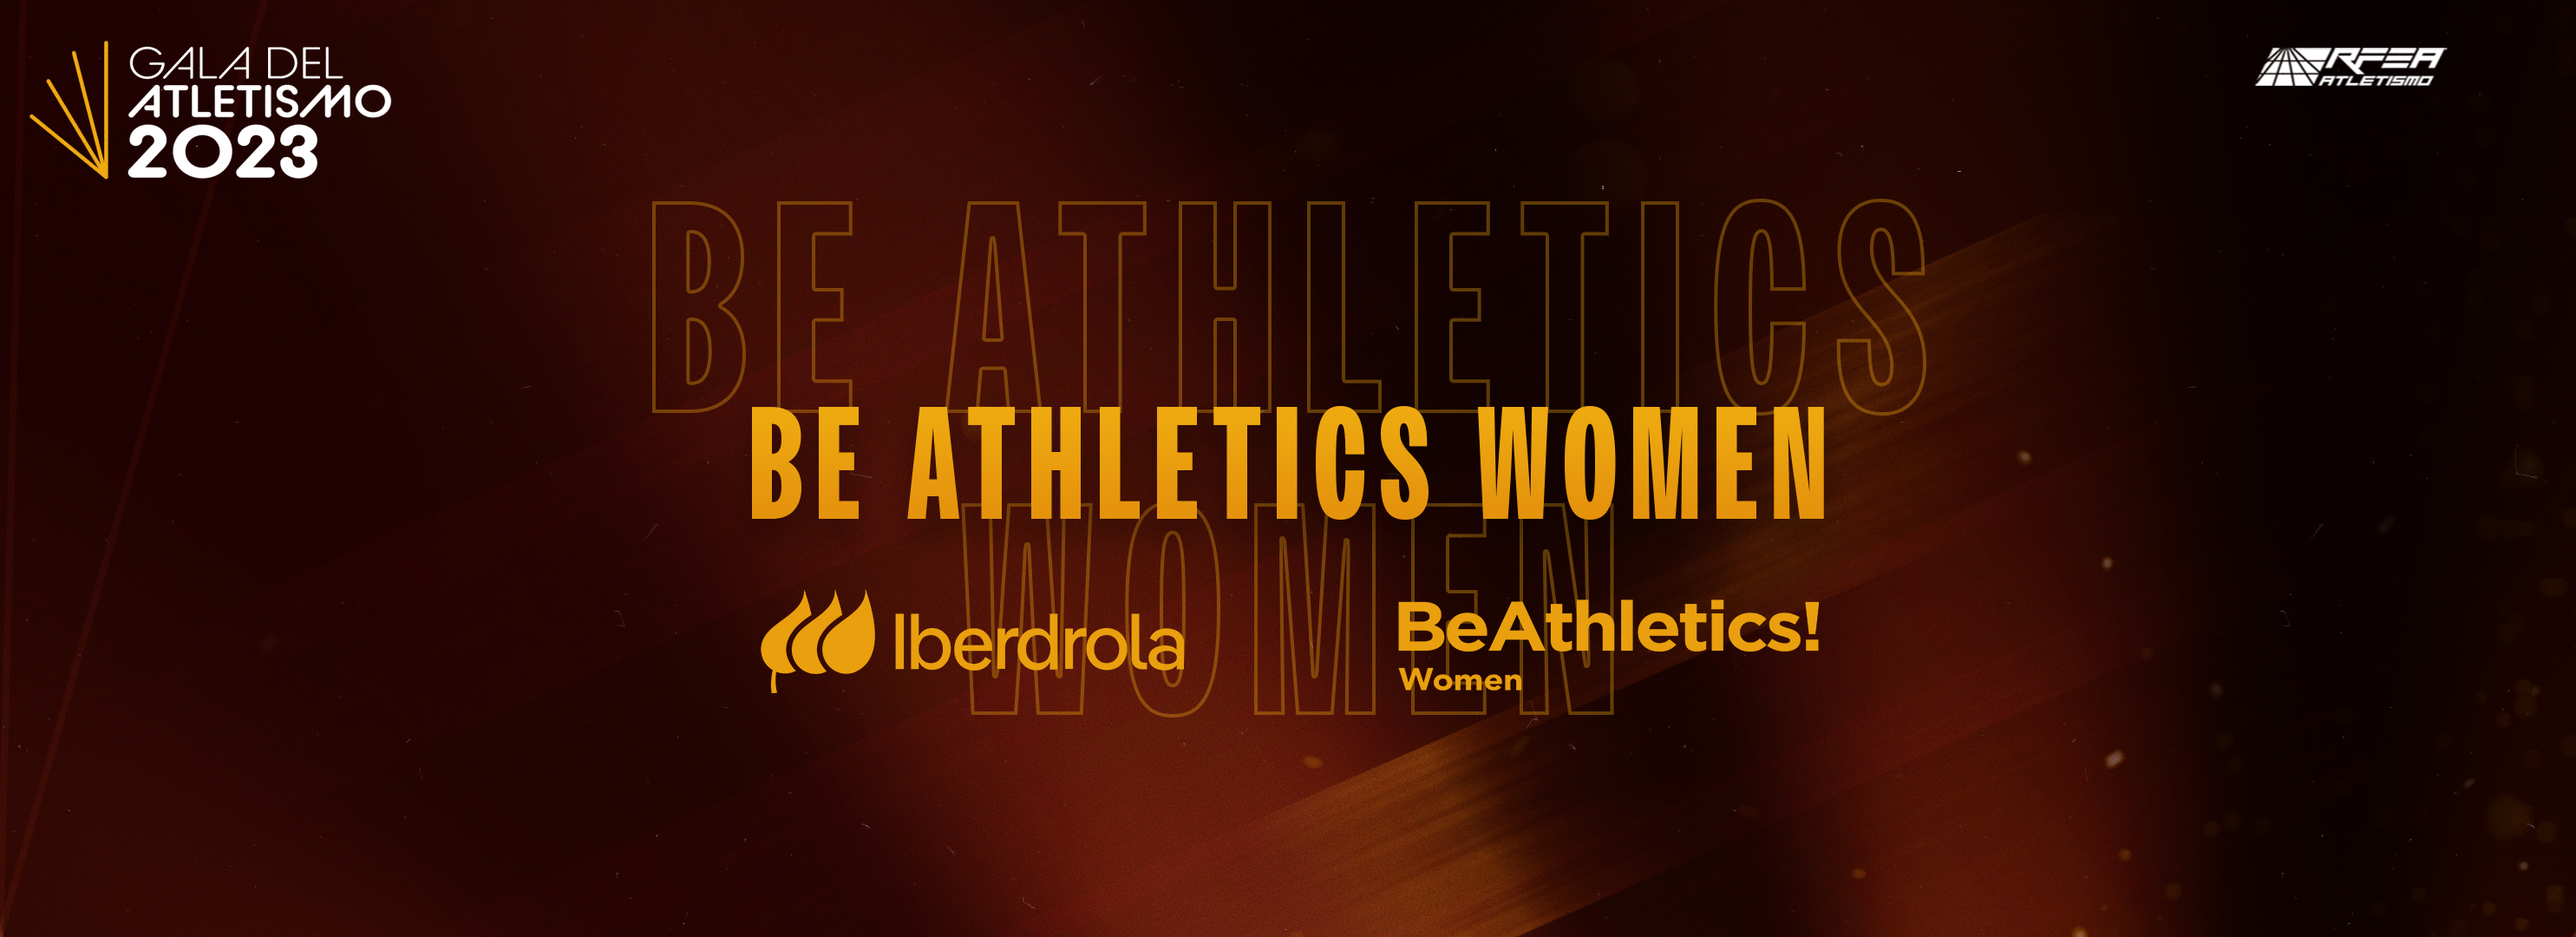 Gala 2023 - Be Athletics Women